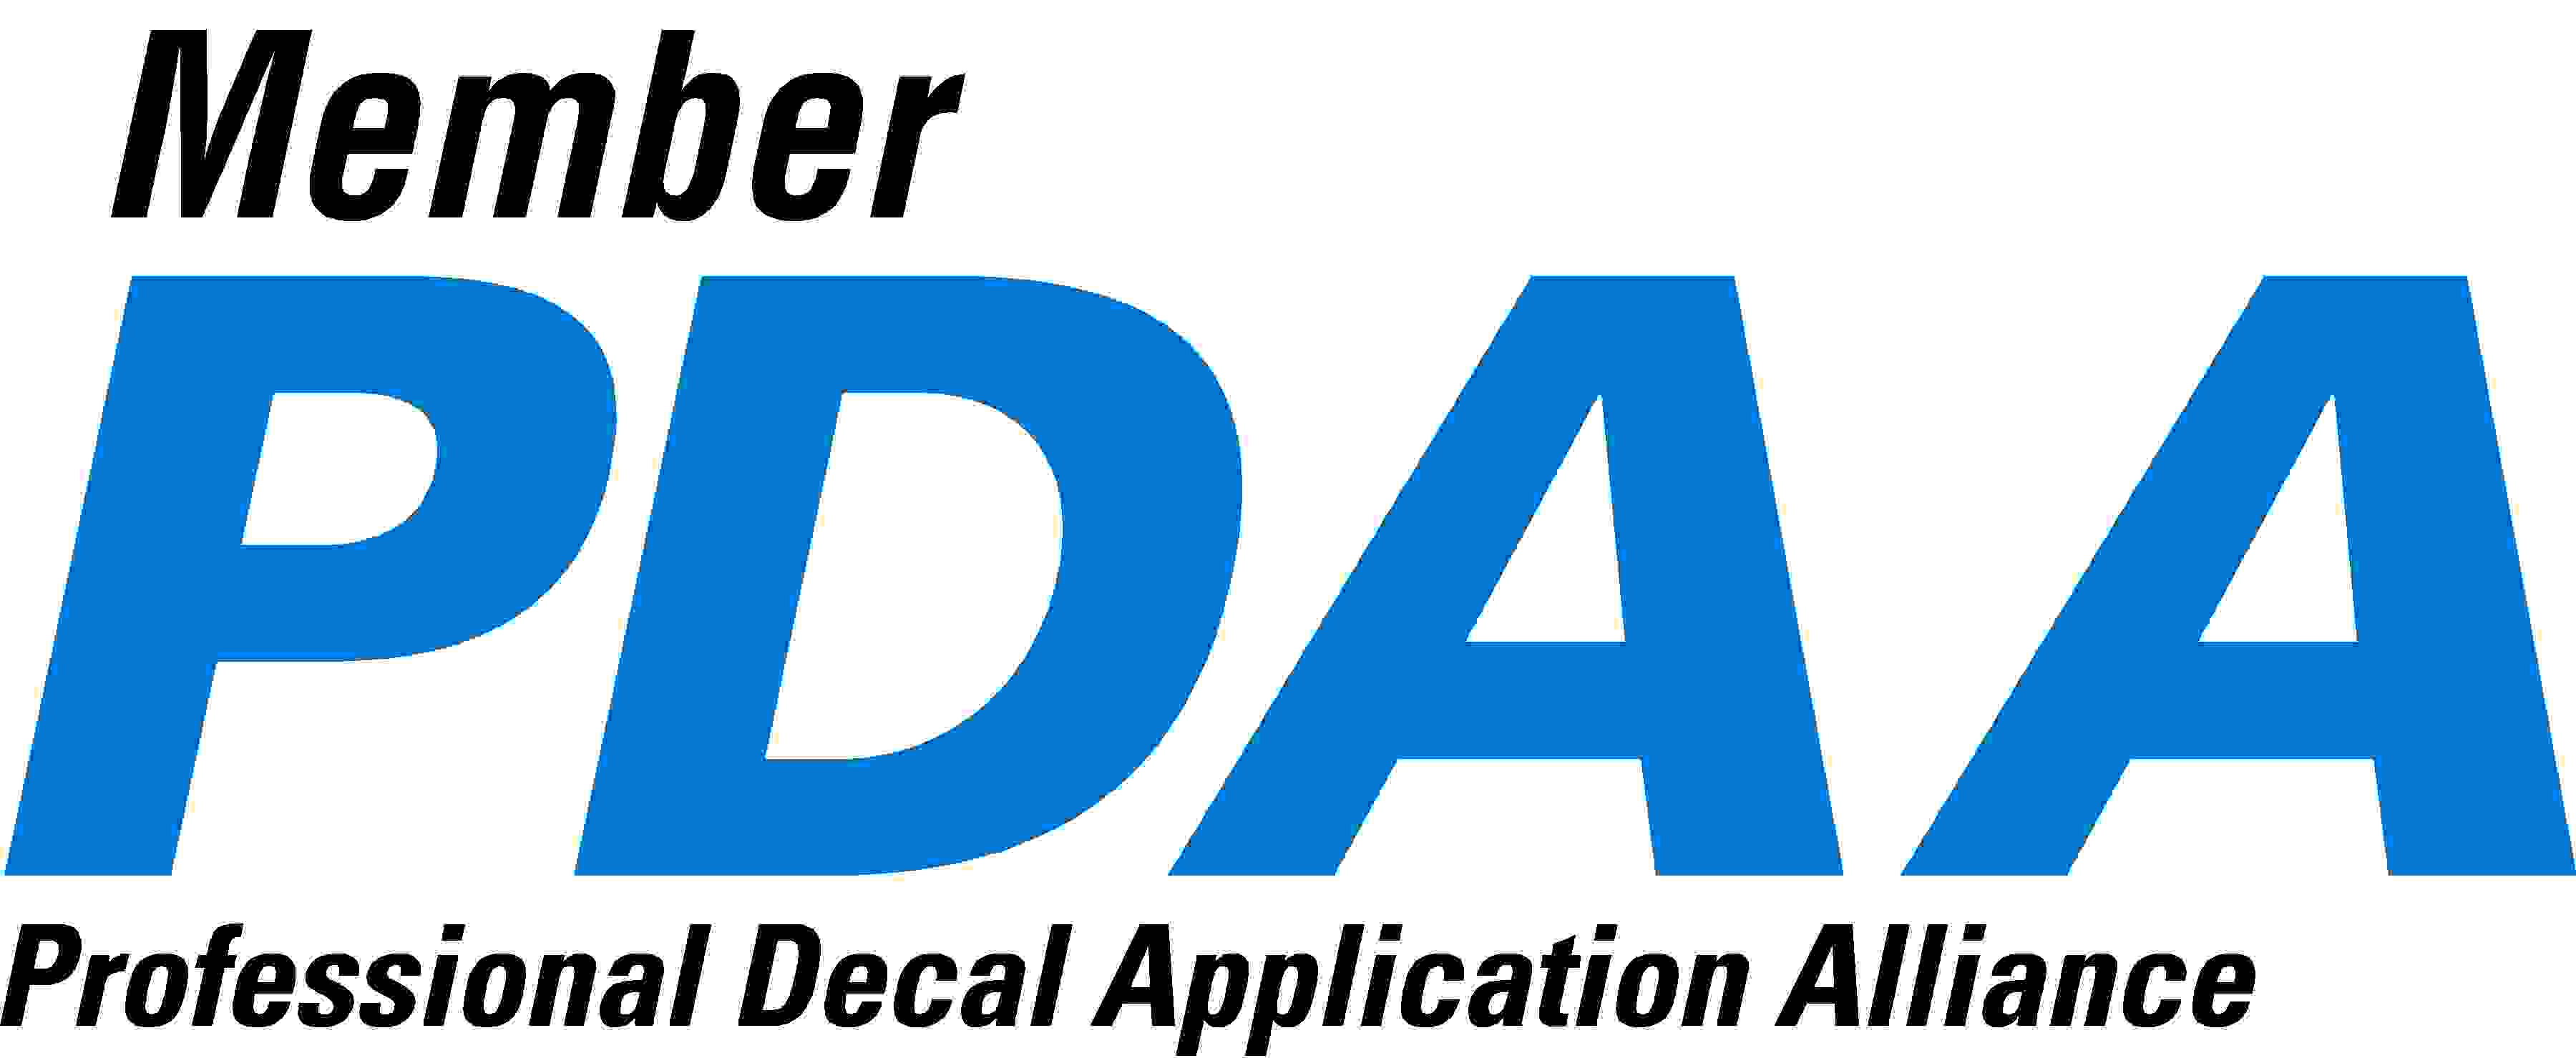 PDAA Master Certified Installer Logo photo - 1